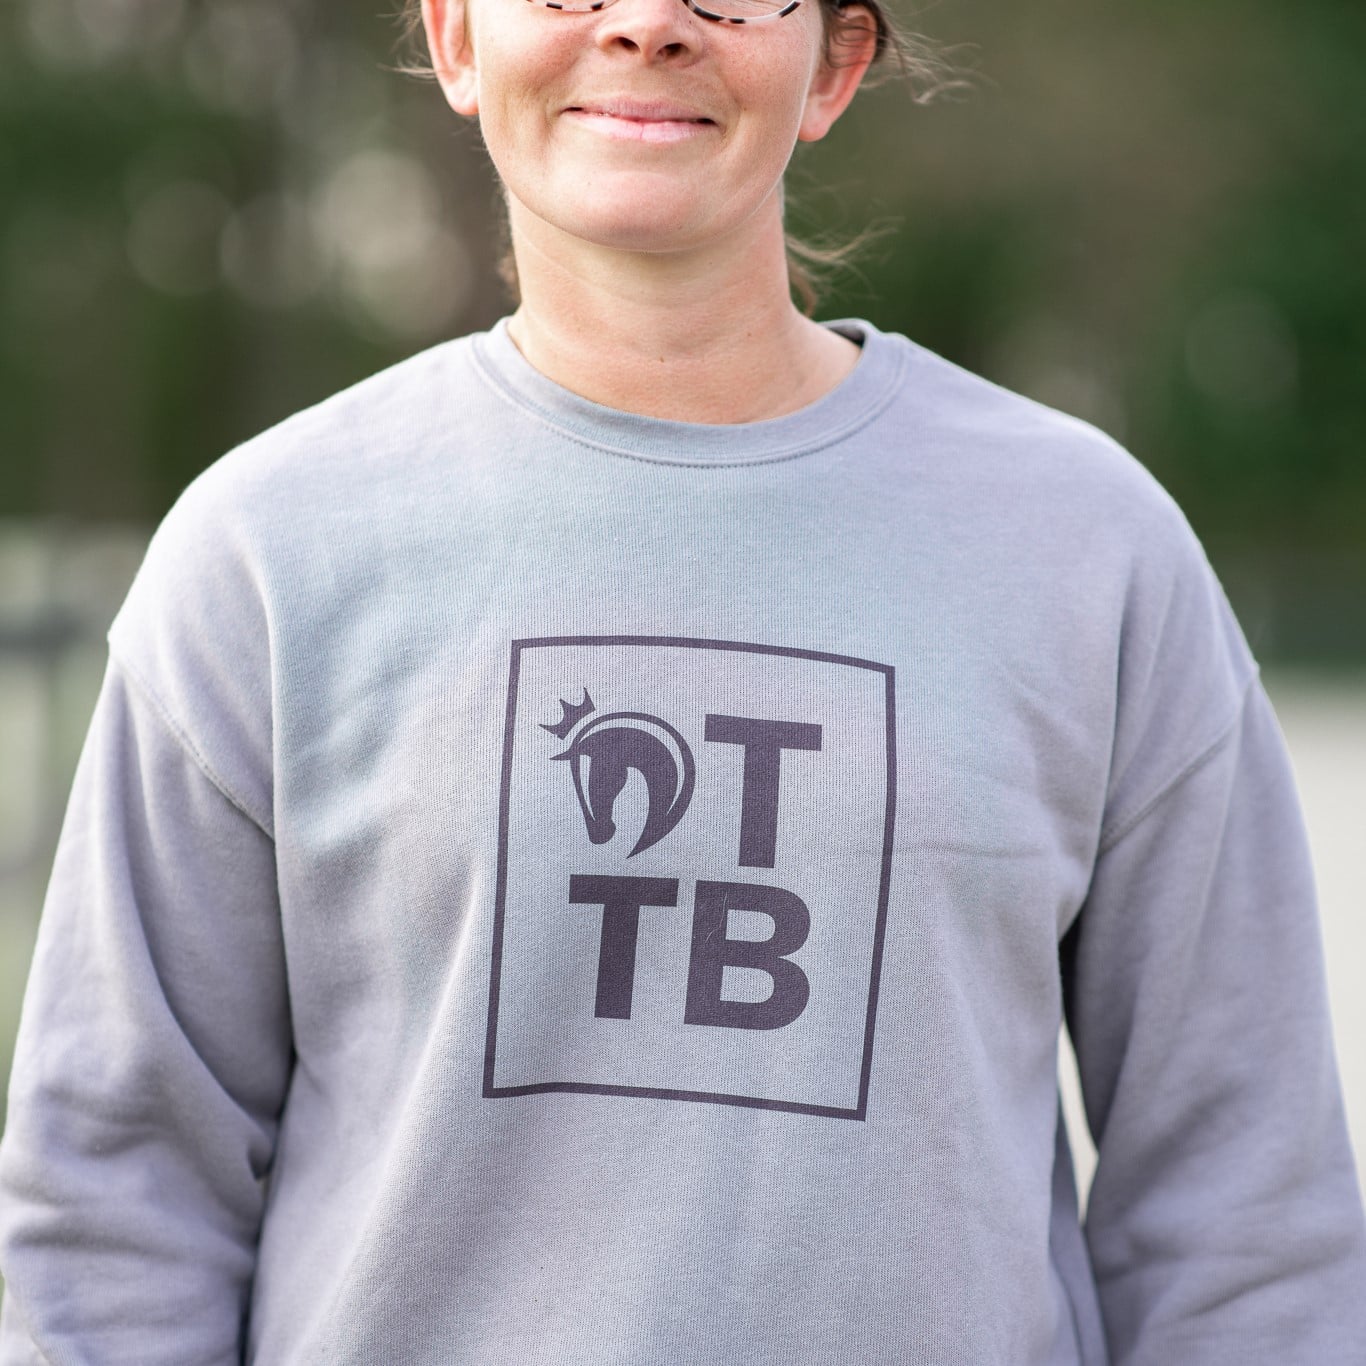 Featured image for “OTTB Crew Sweatshirt”